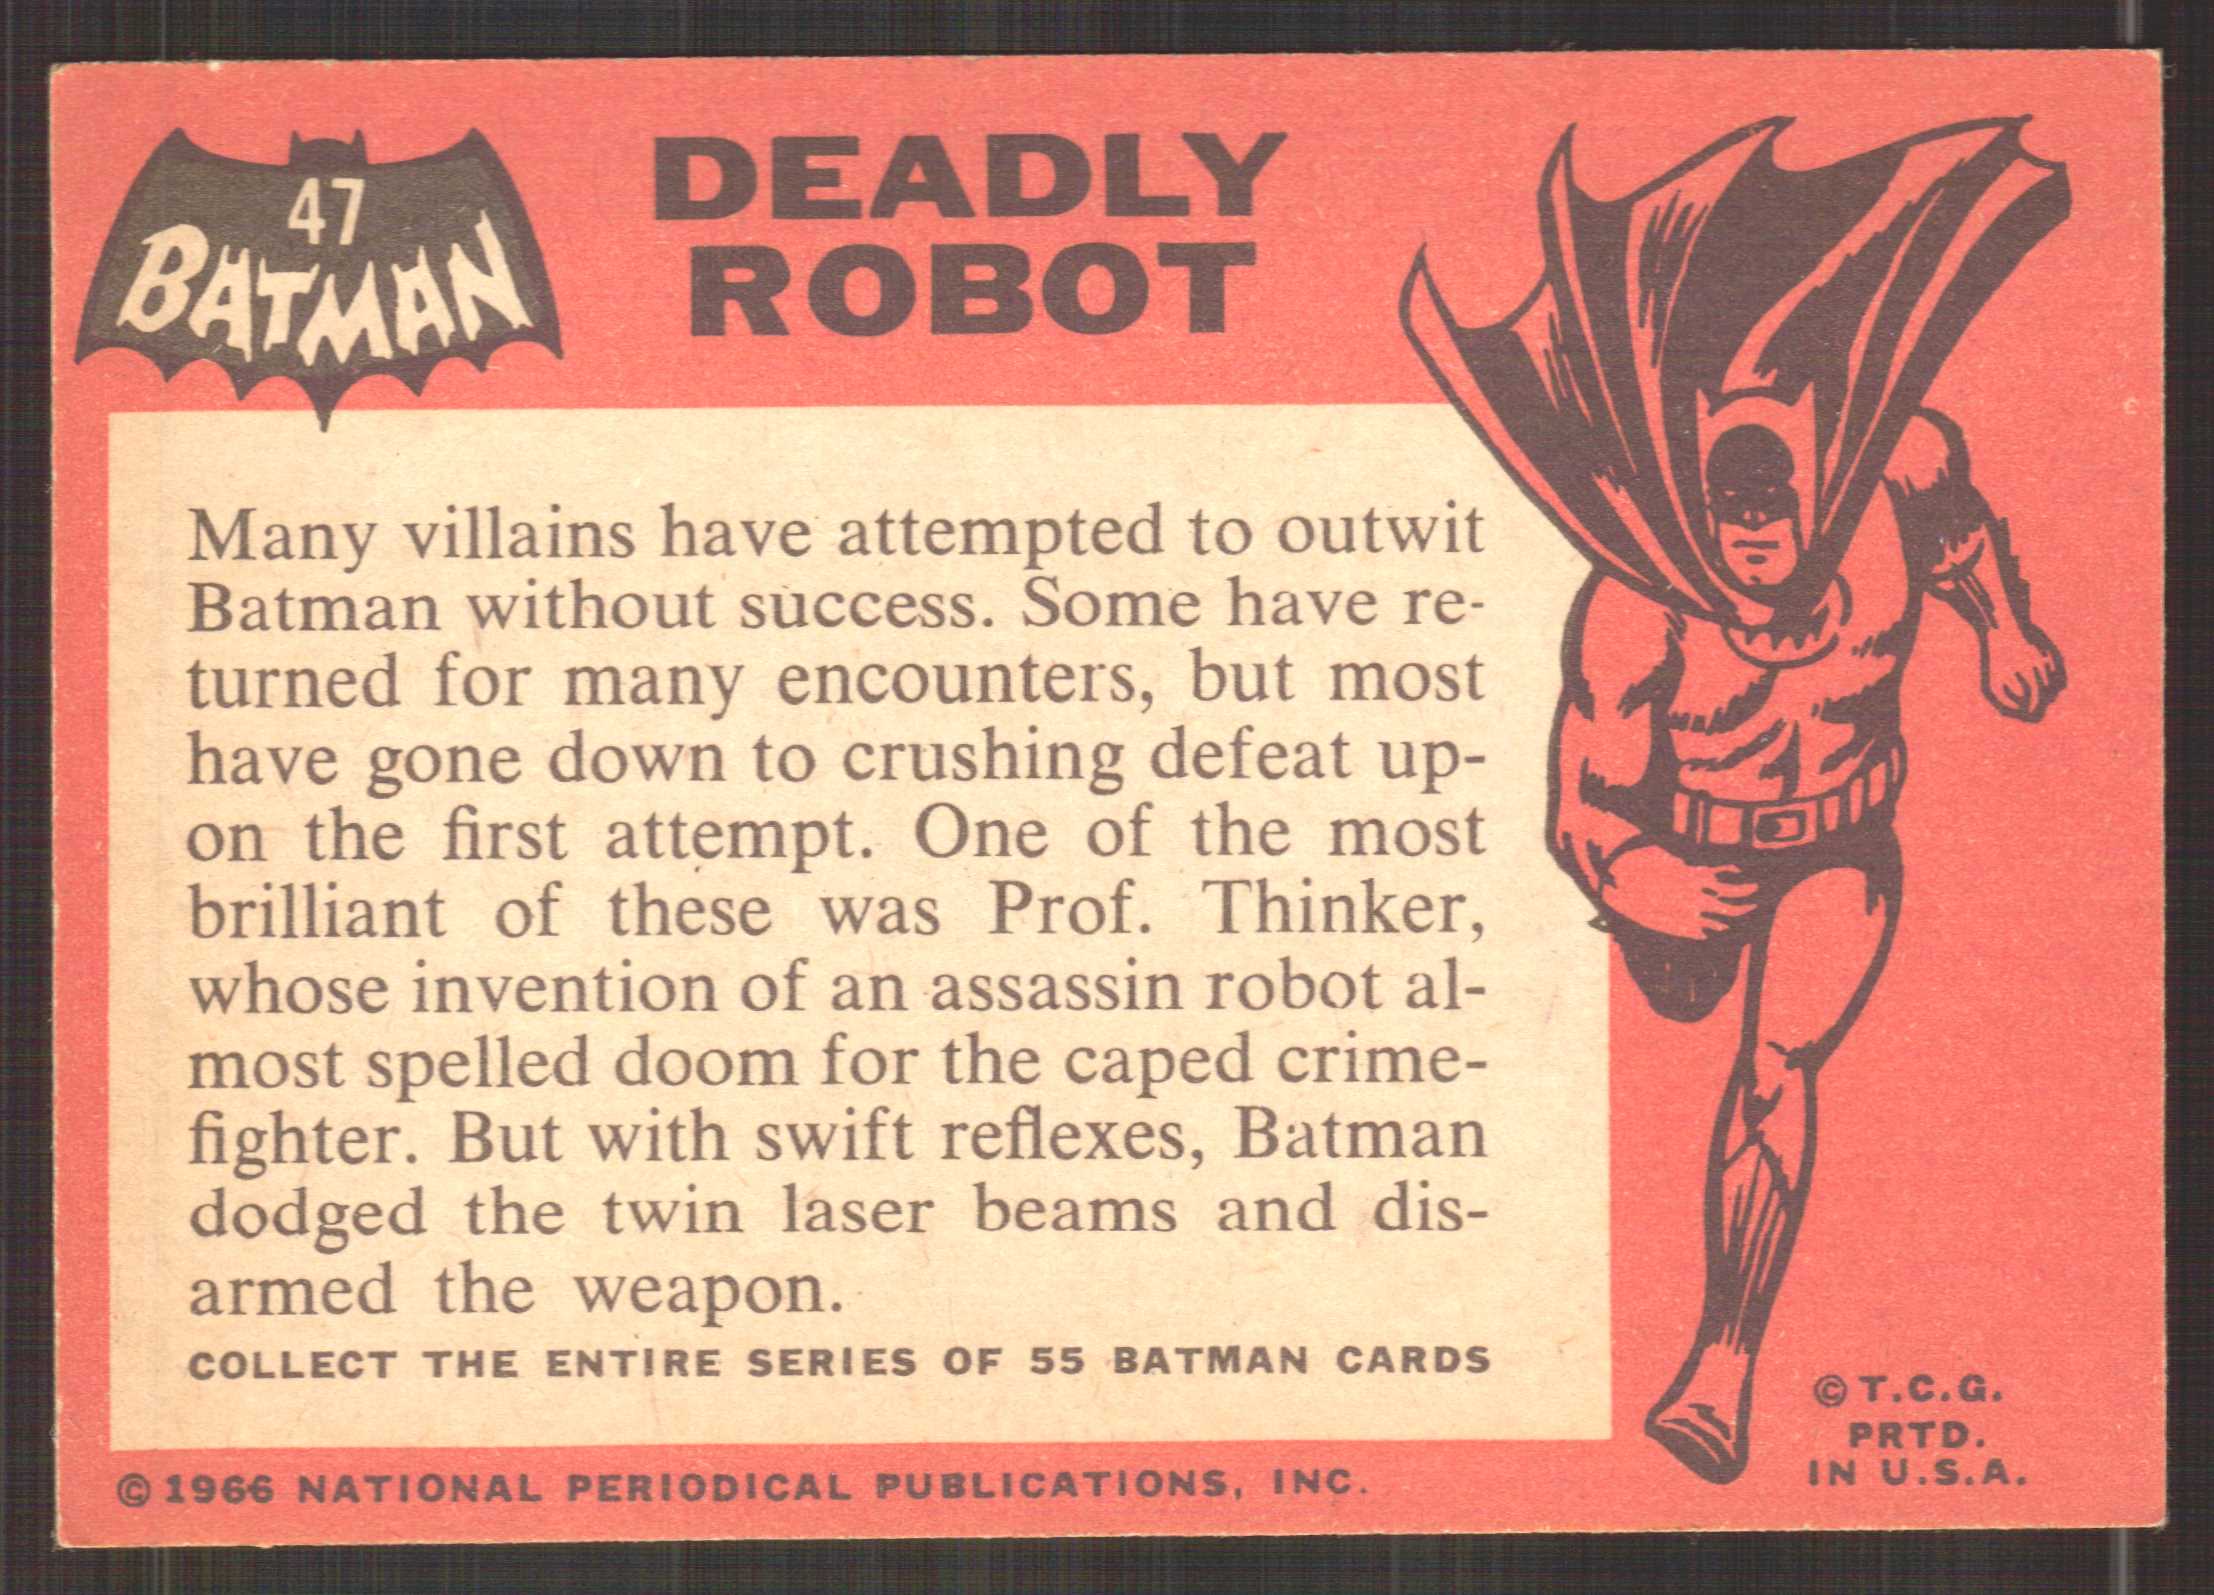 1966 Topps Batman Black Bat #47 Deadly Robot back image